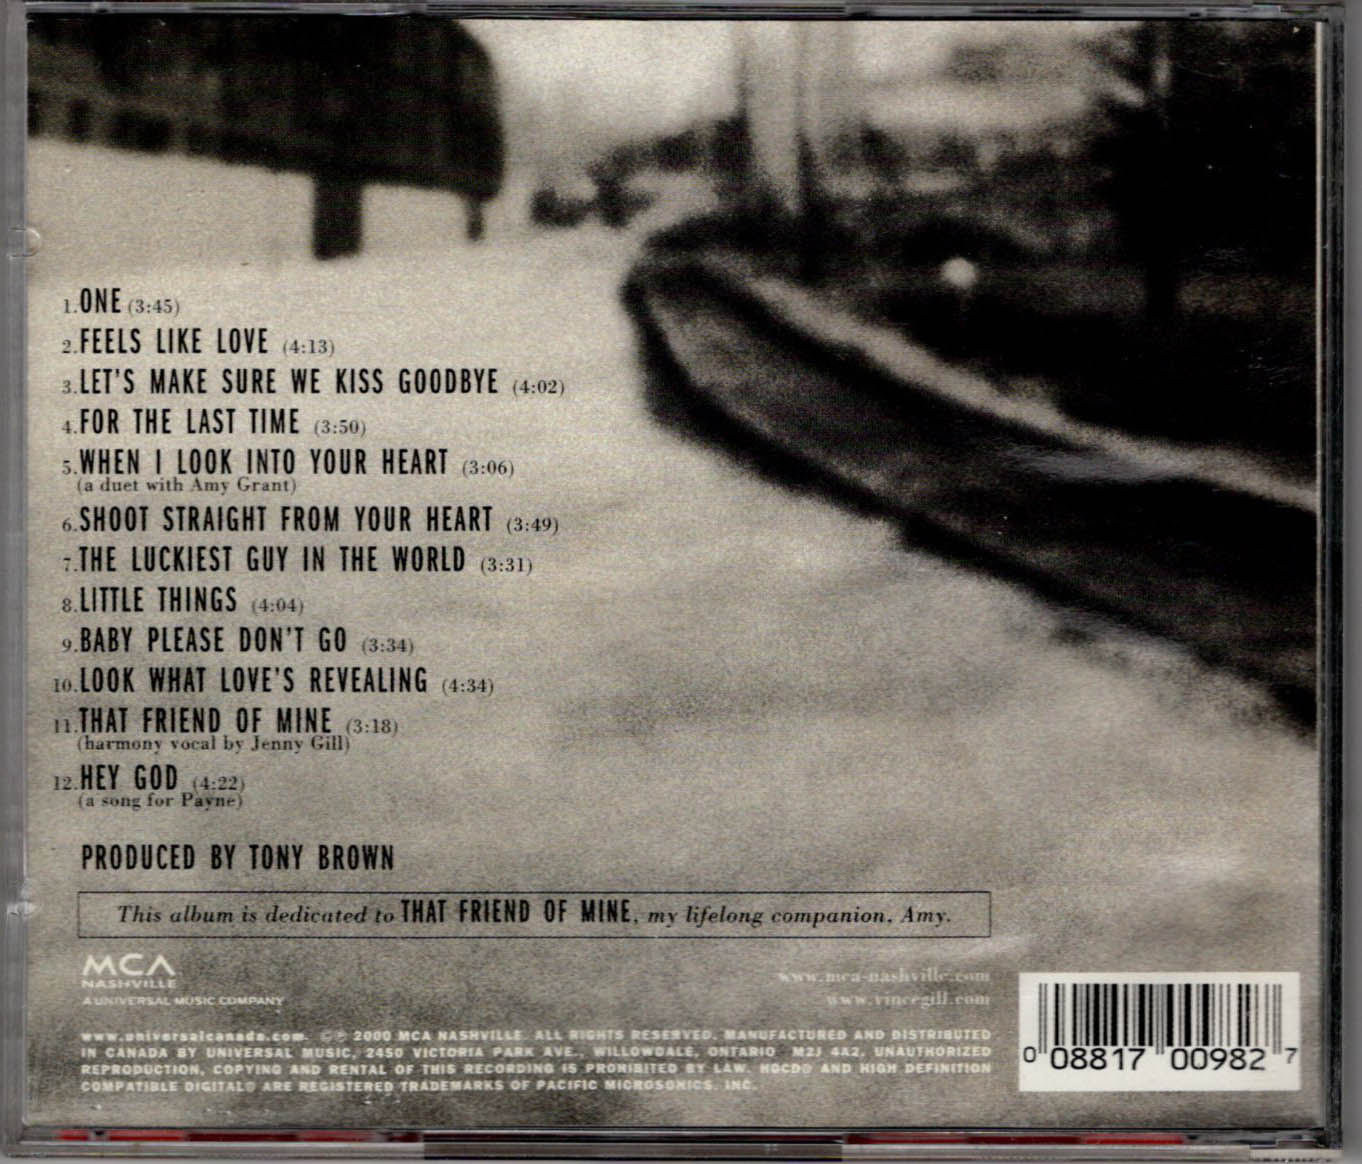 LET'S MAKE SURE WE KISS GOODBYE - Vince Gill, 2000 CD